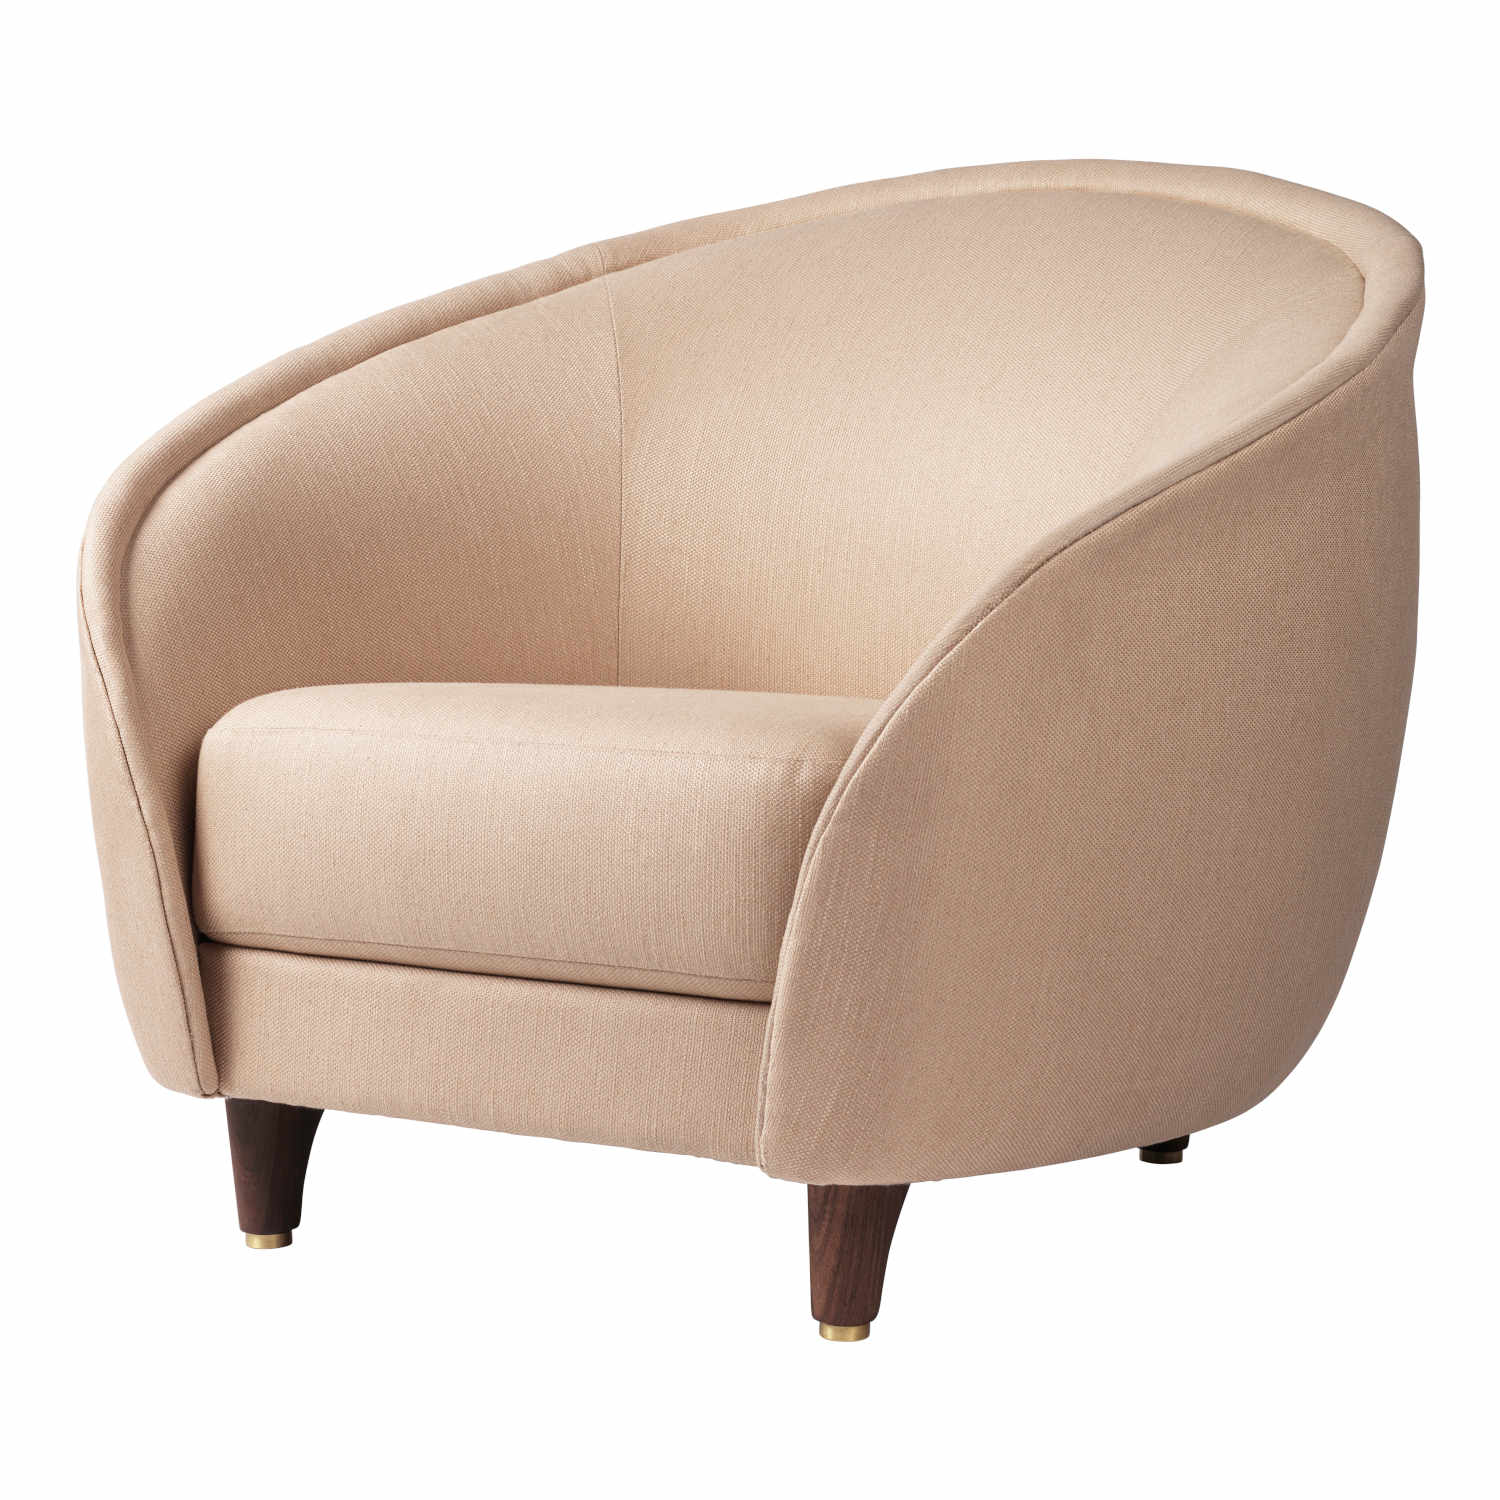 Revers Lounge Chair Sessel, Bezug kvadrat remix 0912 stoff, Untergestell Wood Base oak (geölt) von GUBI